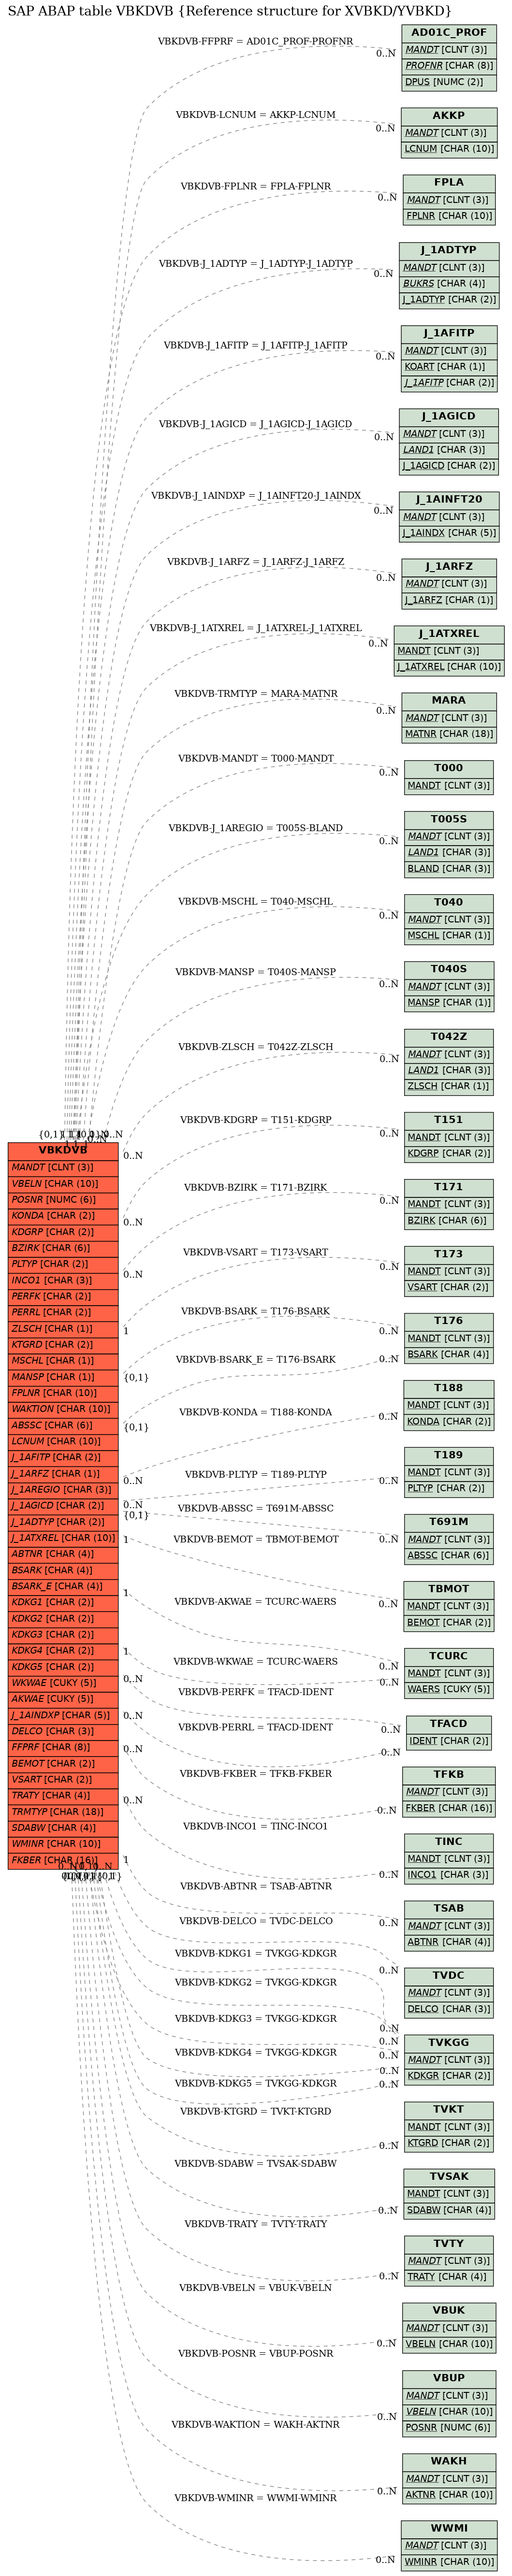 E-R Diagram for table VBKDVB (Reference structure for XVBKD/YVBKD)